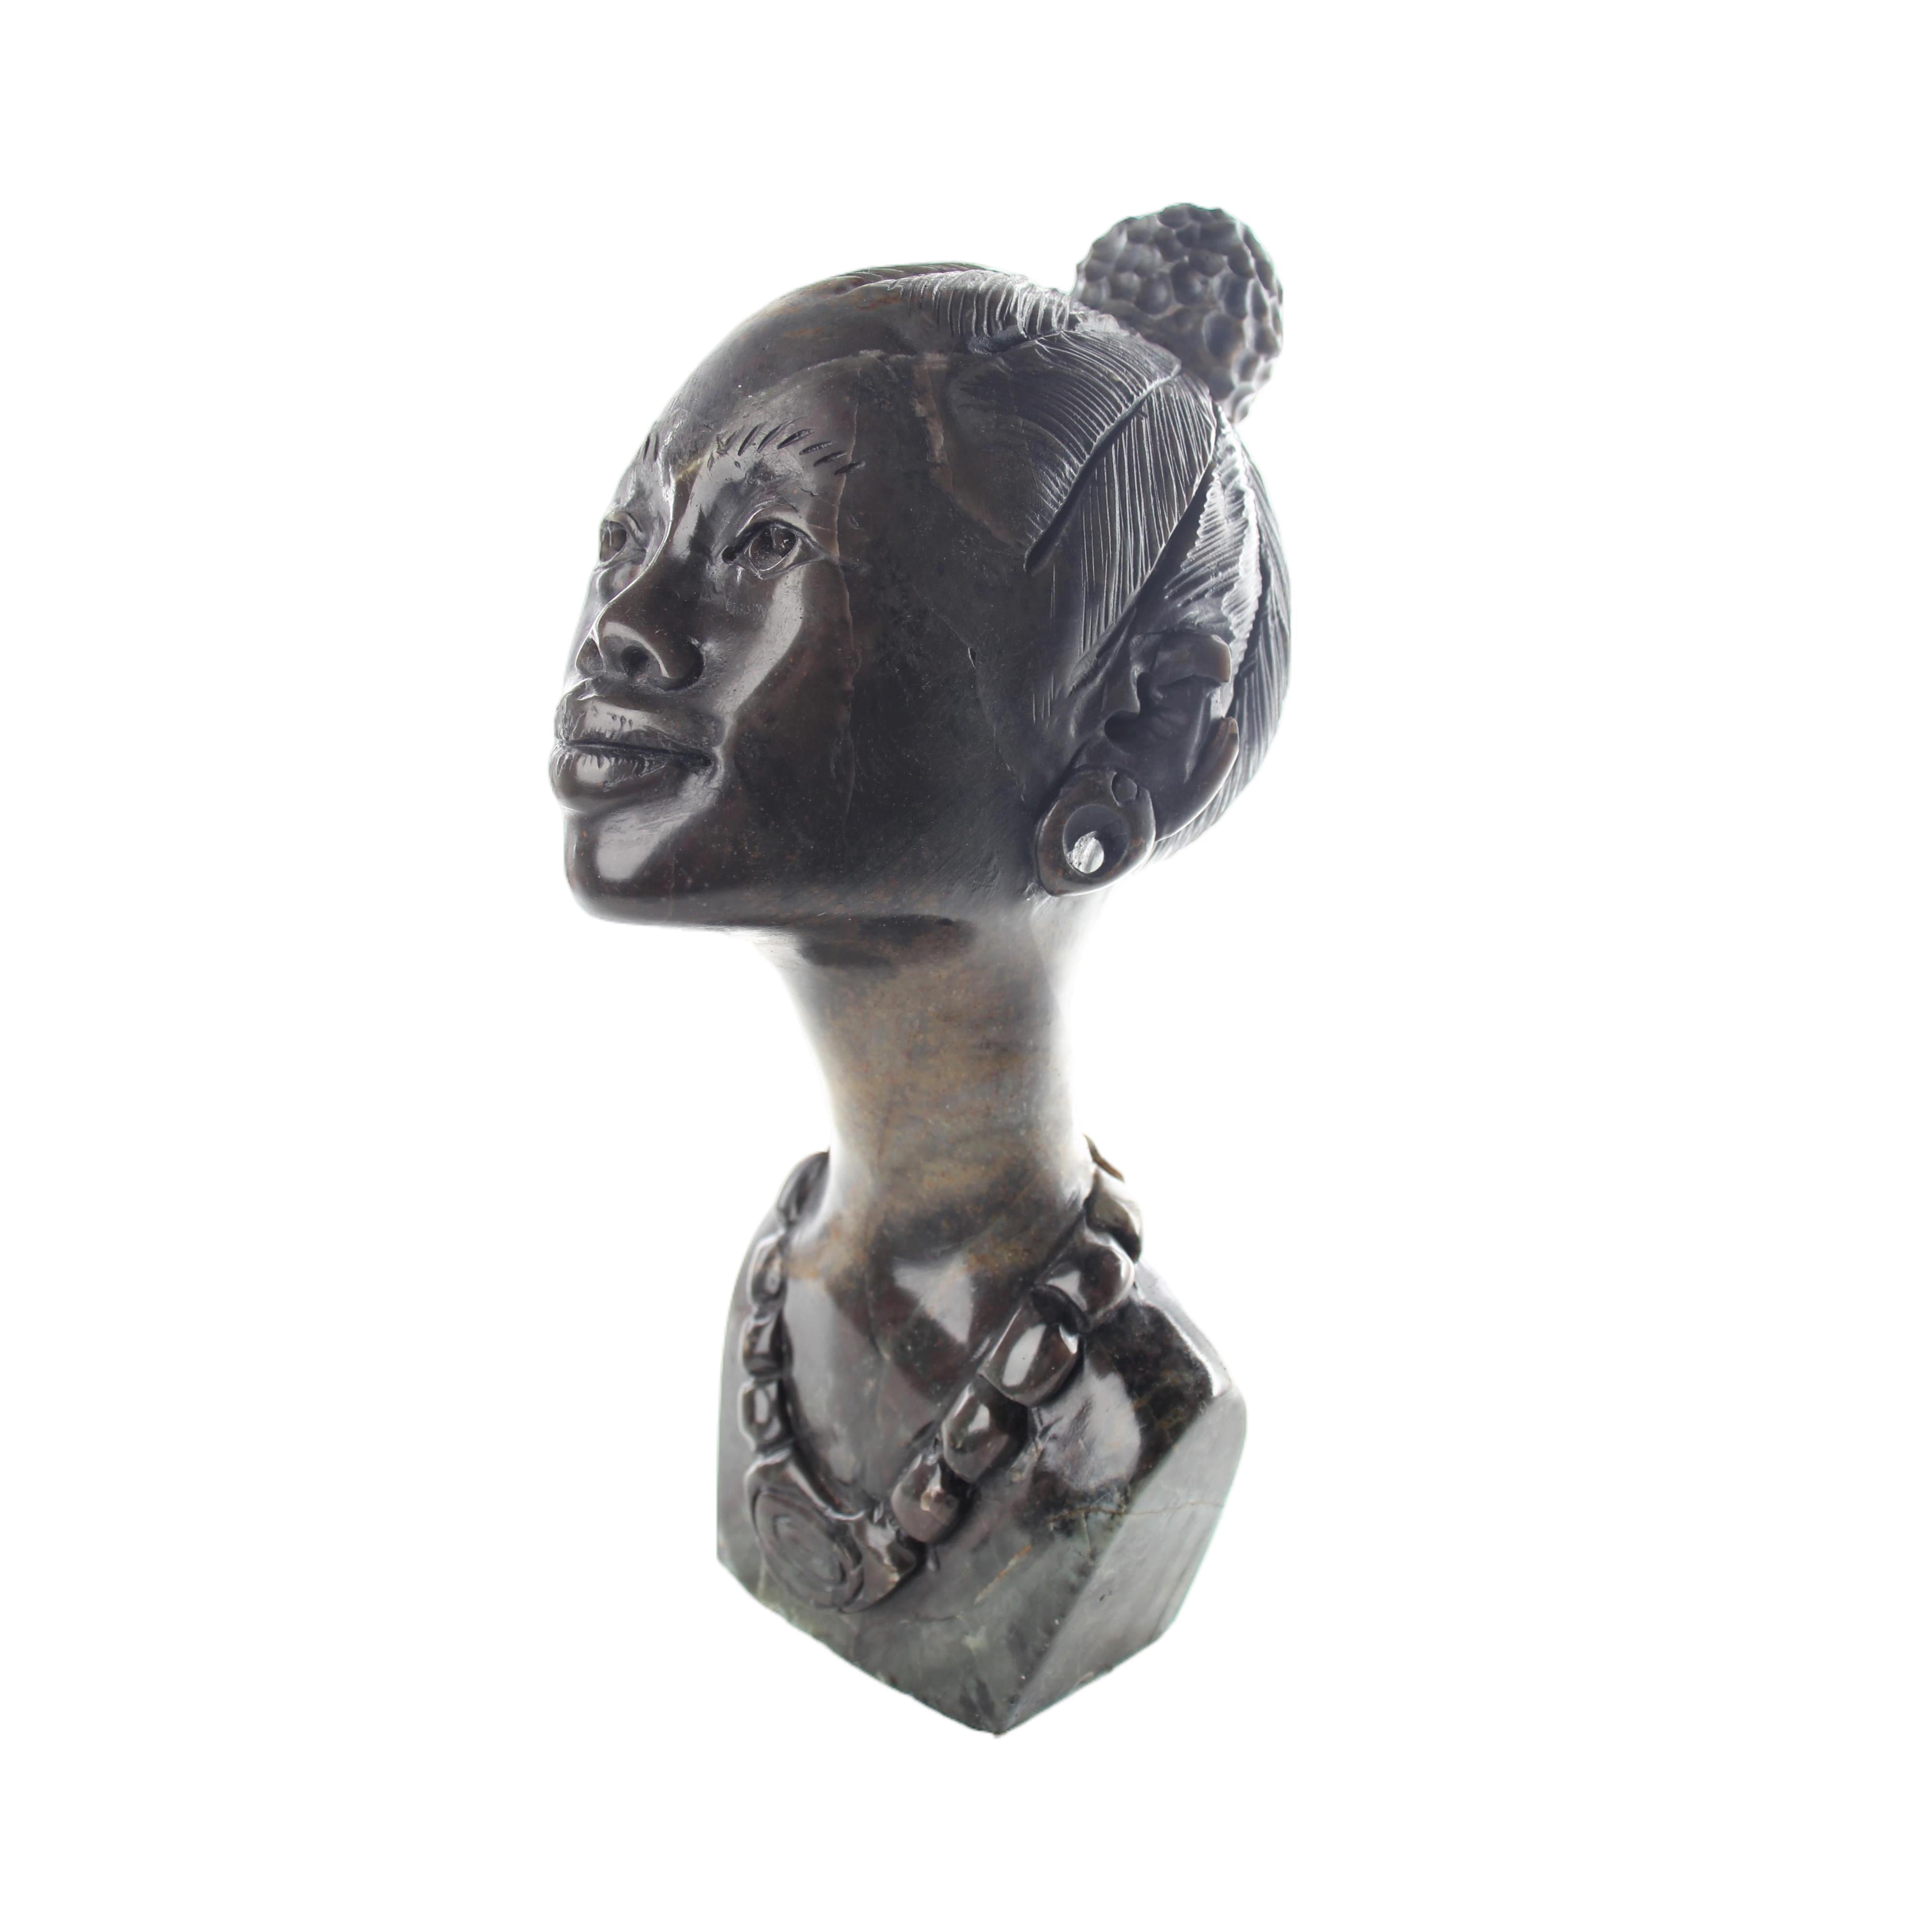 Shona Tribe Serpentine Stone Busts ~9.8" Tall